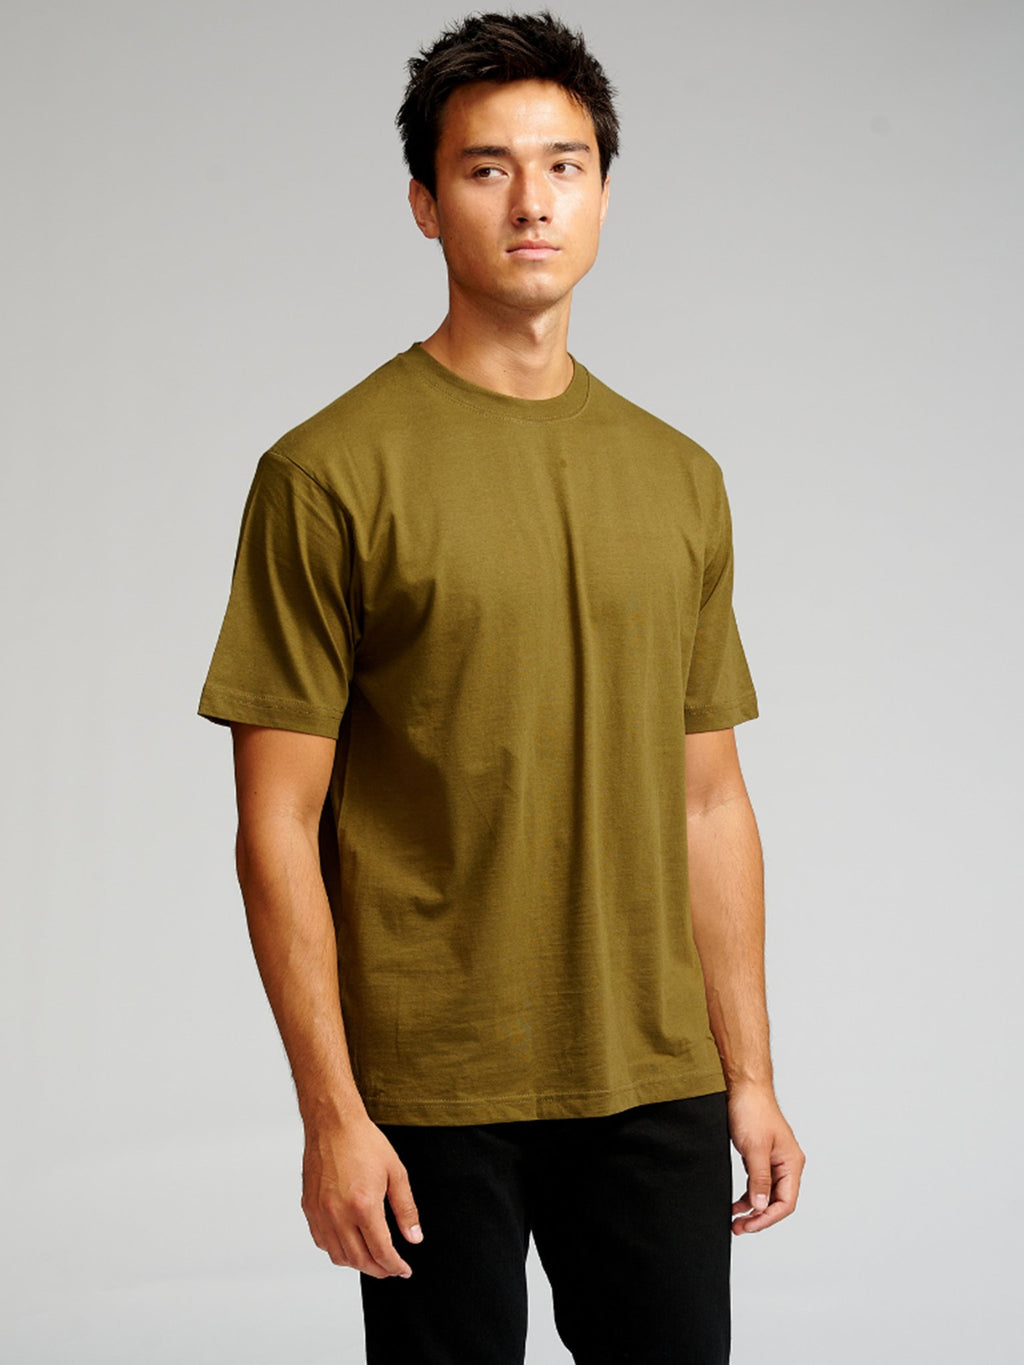 Oversized t -shirt - leger